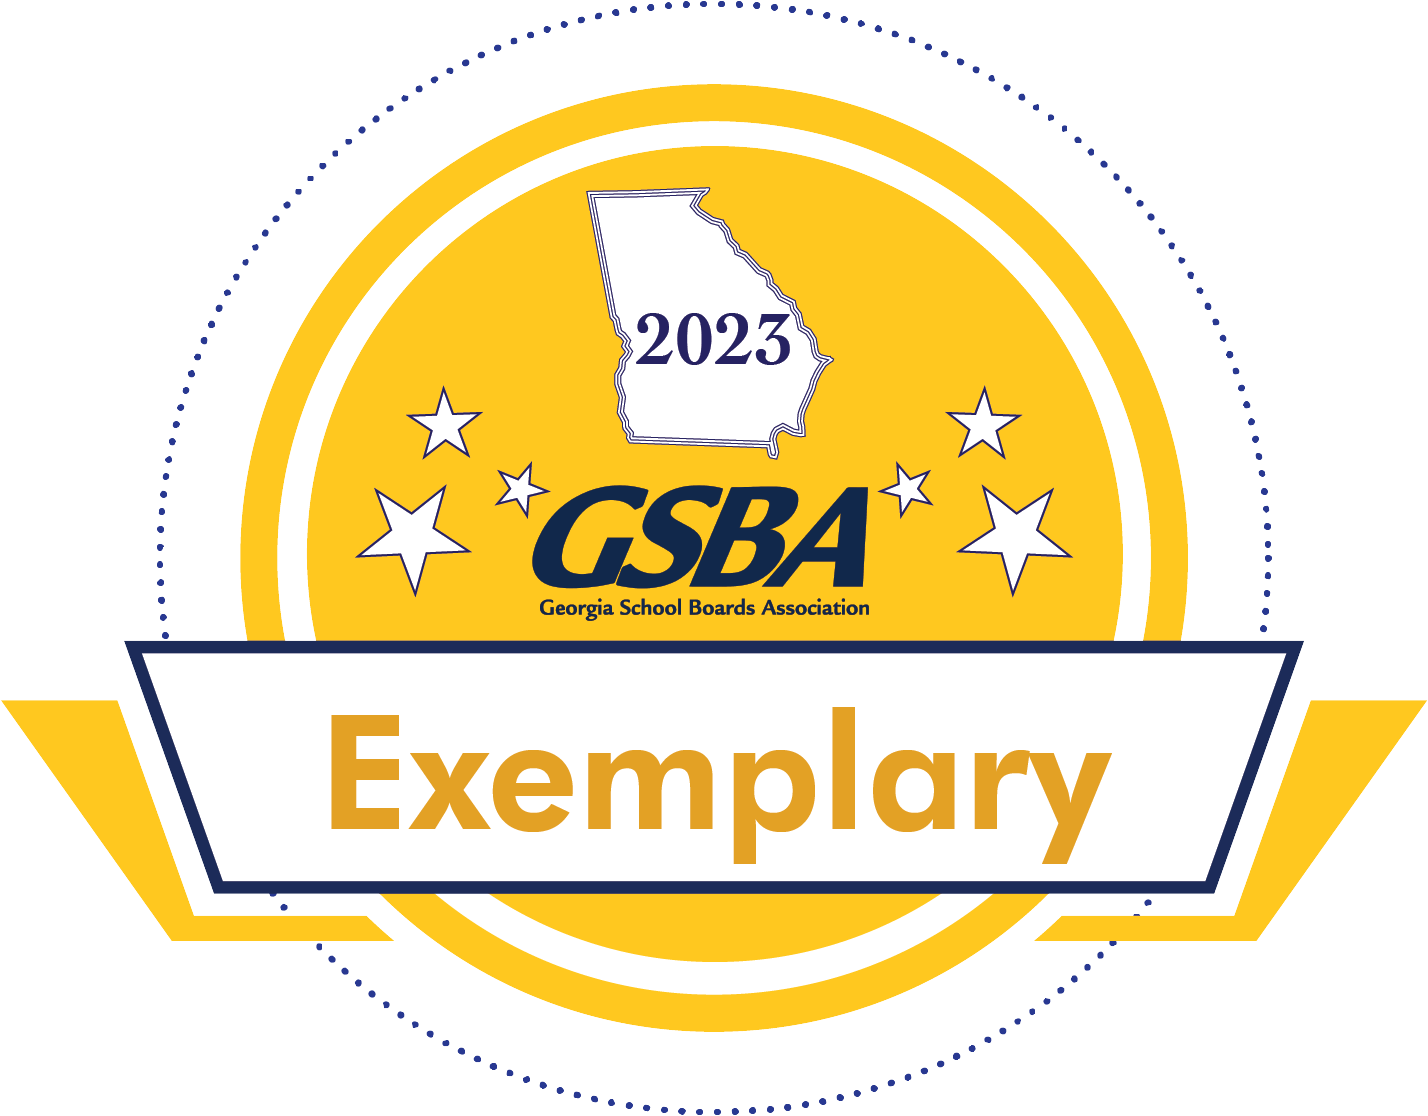 GSBA Exemplary Board 2023